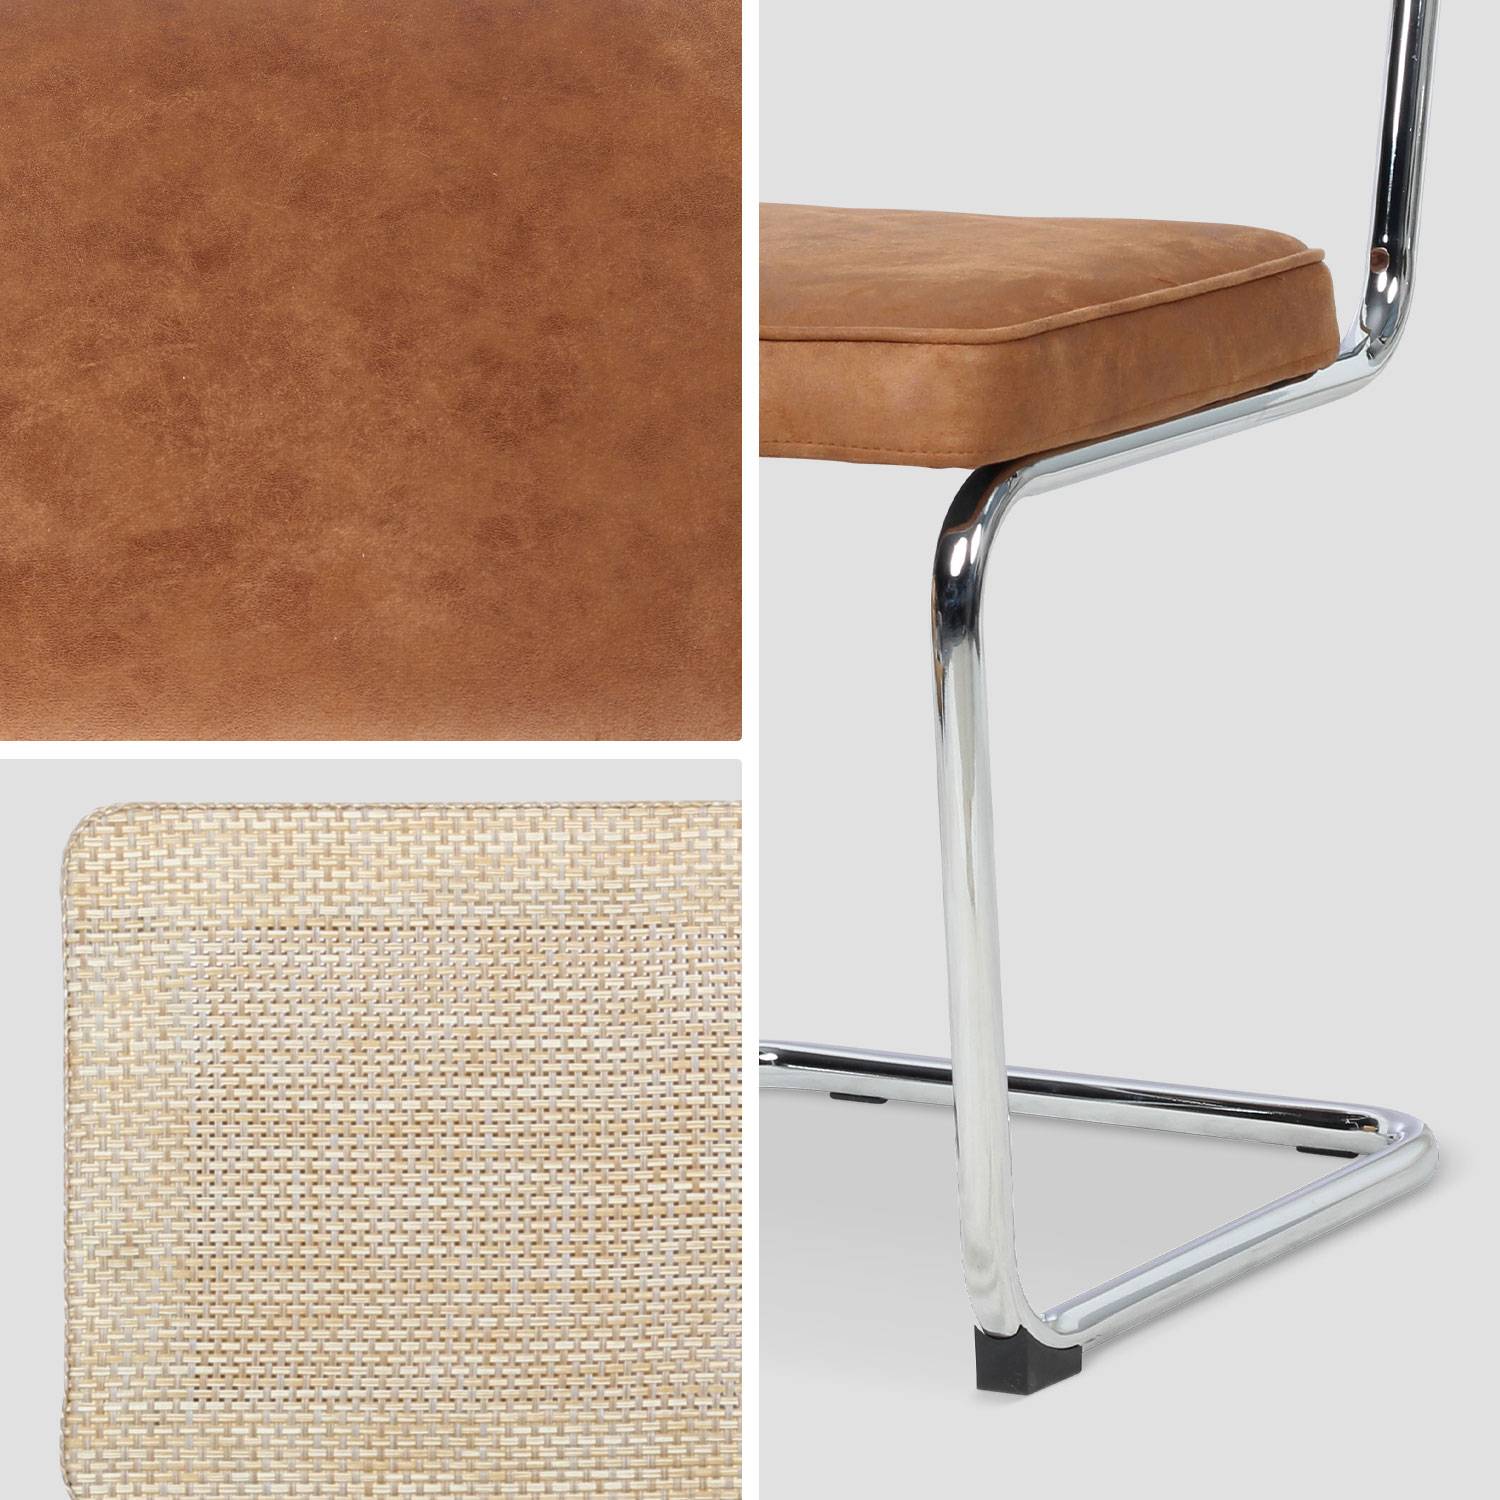 2 sillas cantilever - Maja - tela marrón claro y resina efecto ratán, 46 x 54,5 x 84,5cm  ,sweeek,Photo6